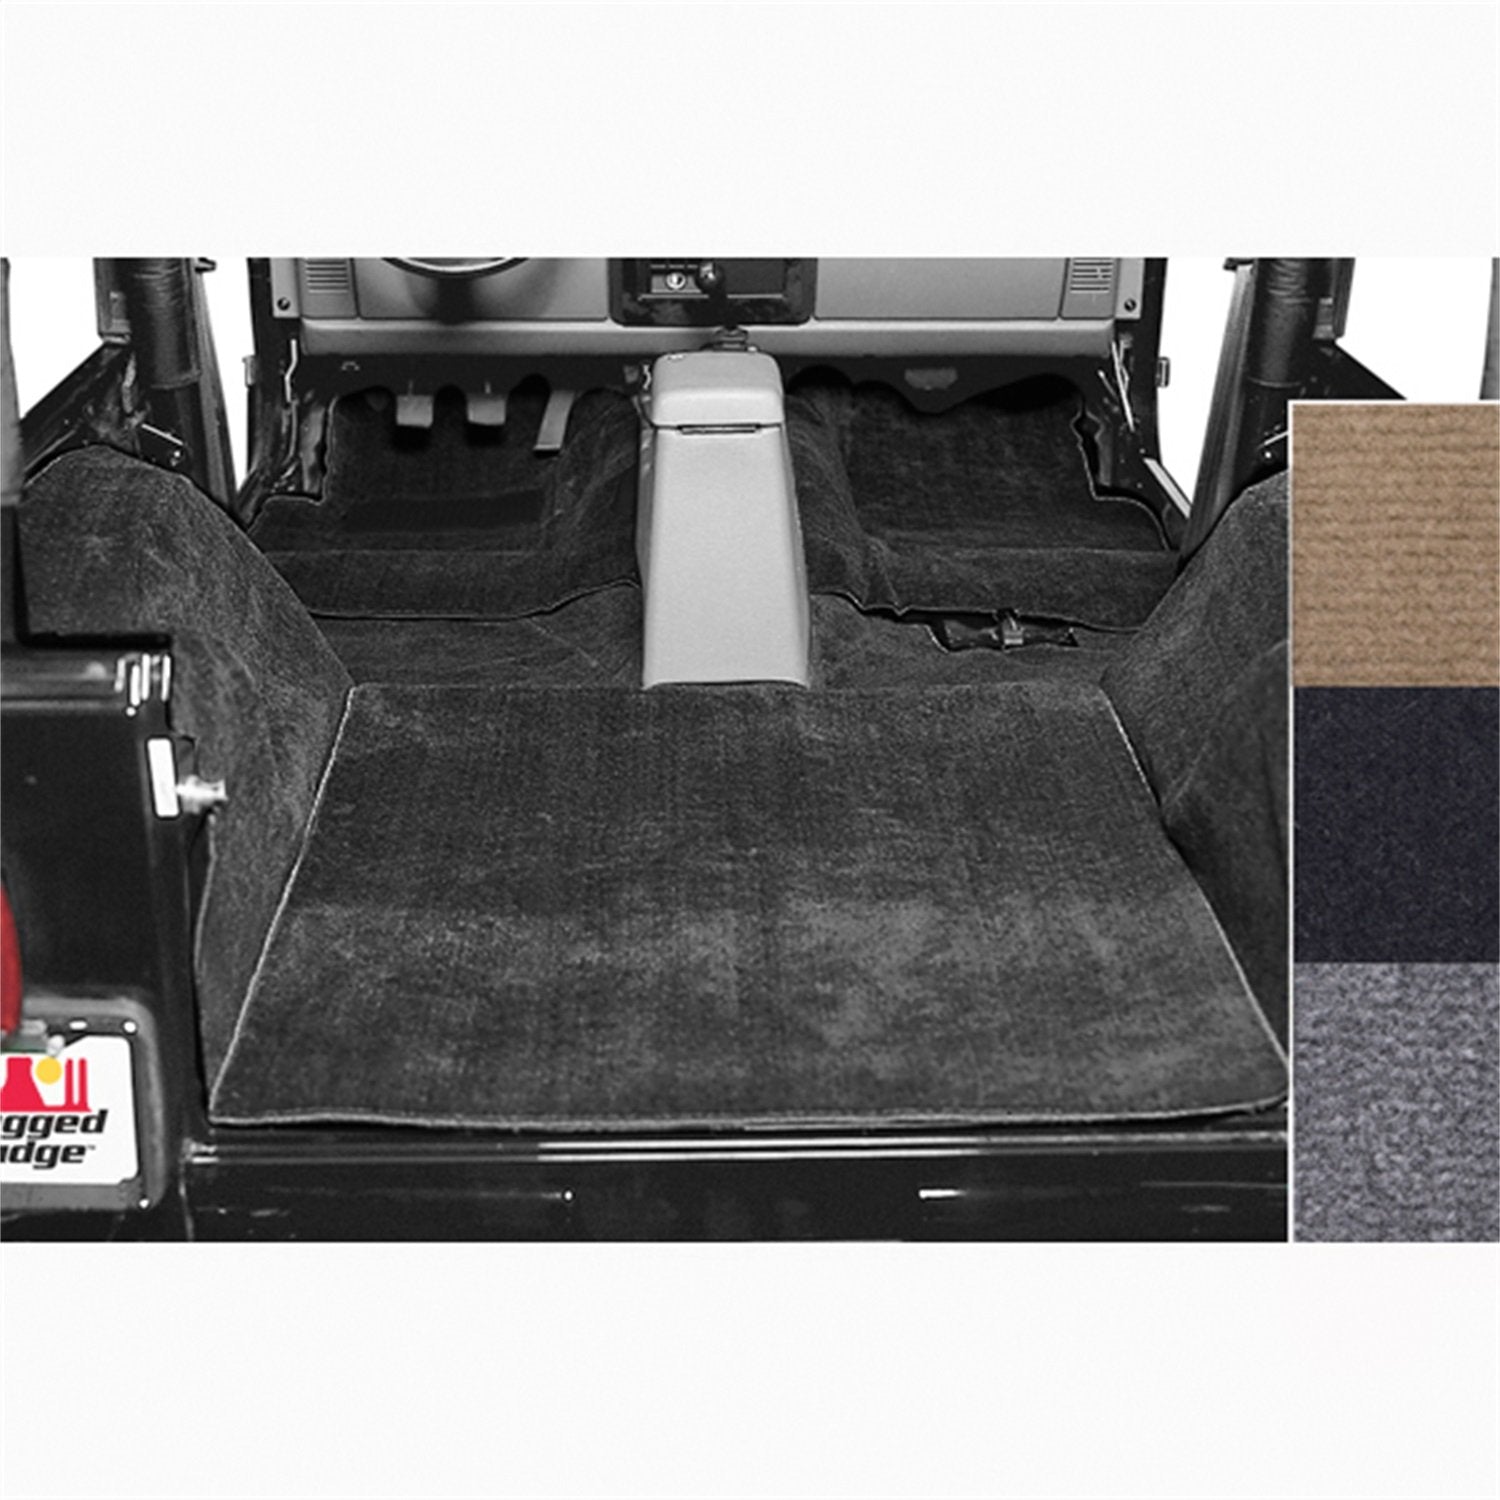 Rugged Ridge 13690.01 Black Deluxe Replacement Carpet Kit